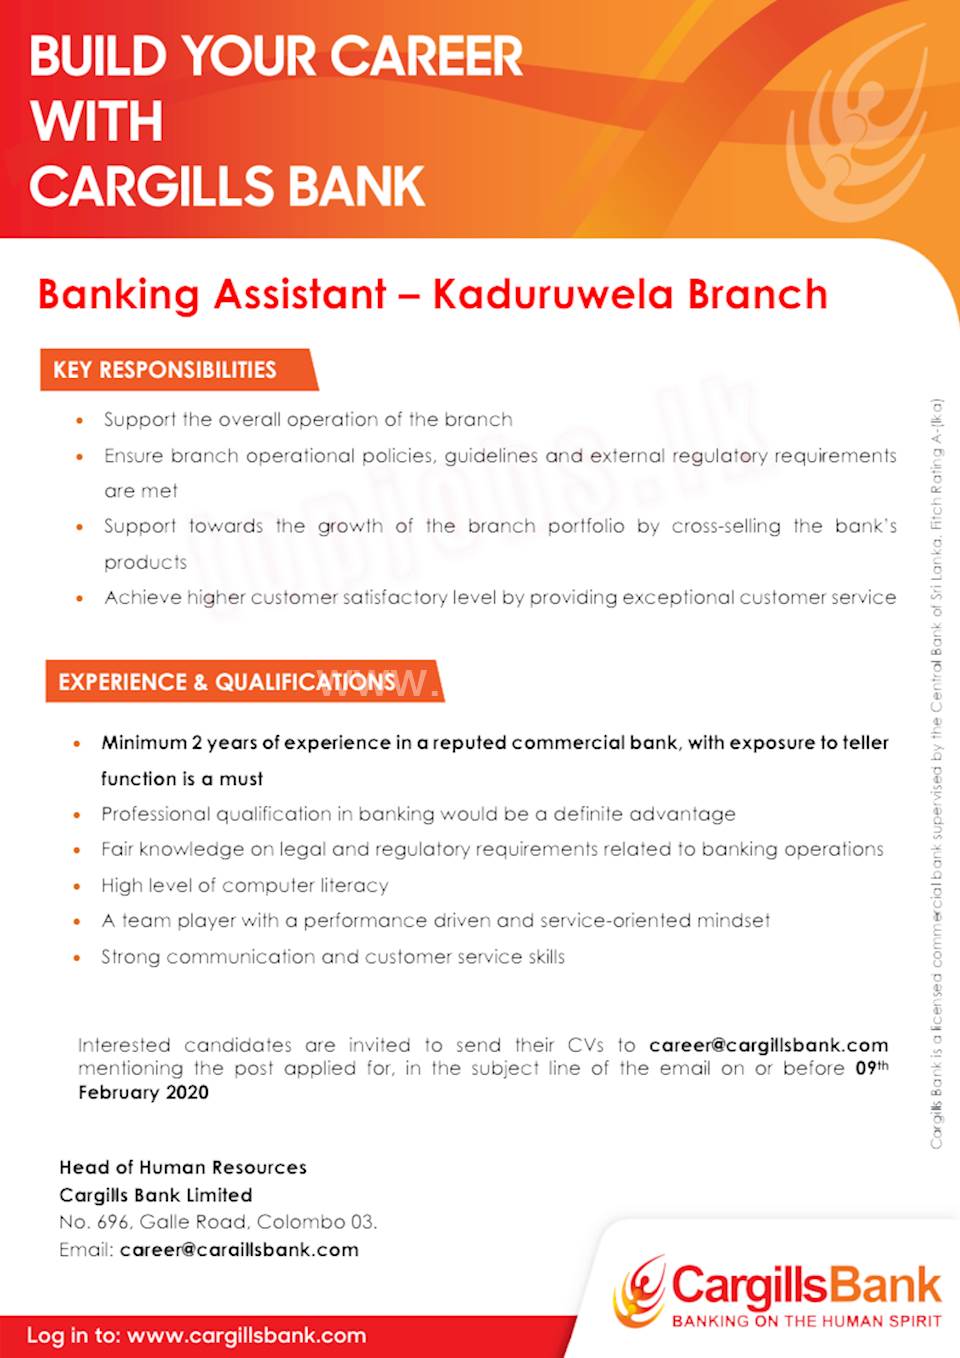 Banking Assistant - Kaduruwela Branch